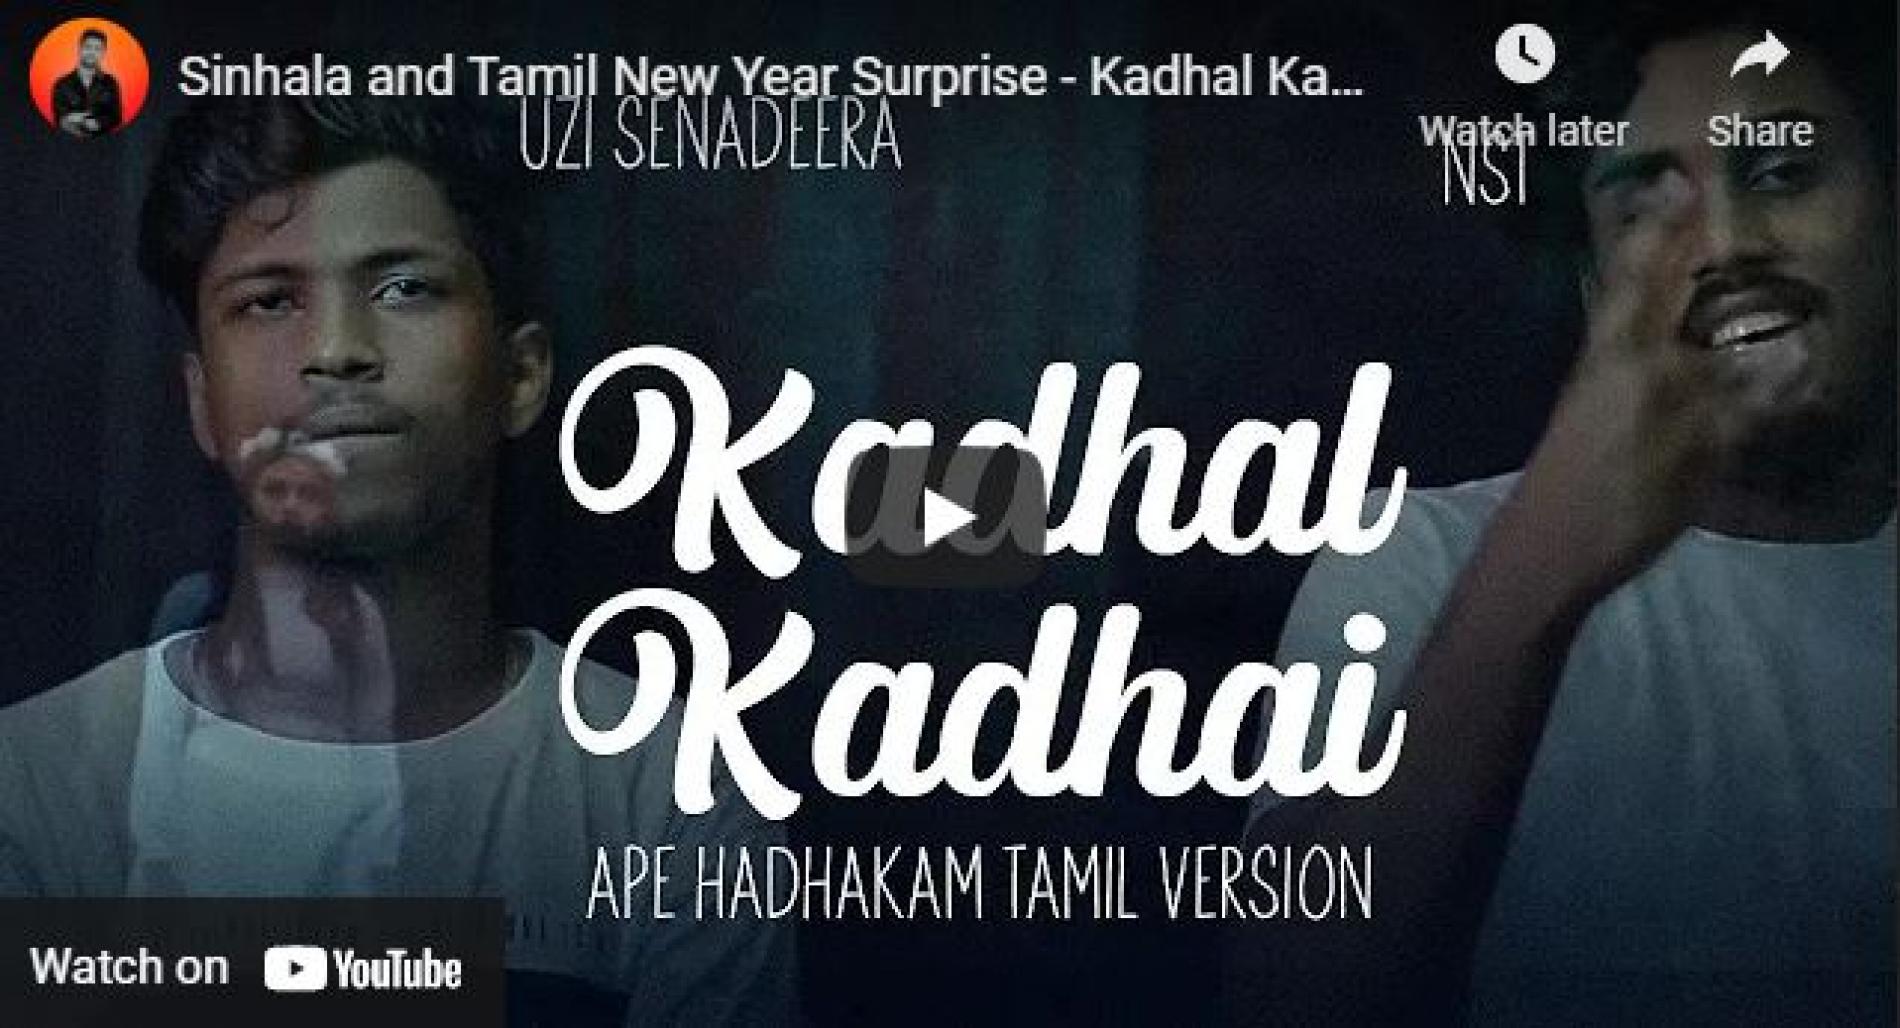 News : Sinhala and Tamil New Year Surprise – Kadhal Kadhai